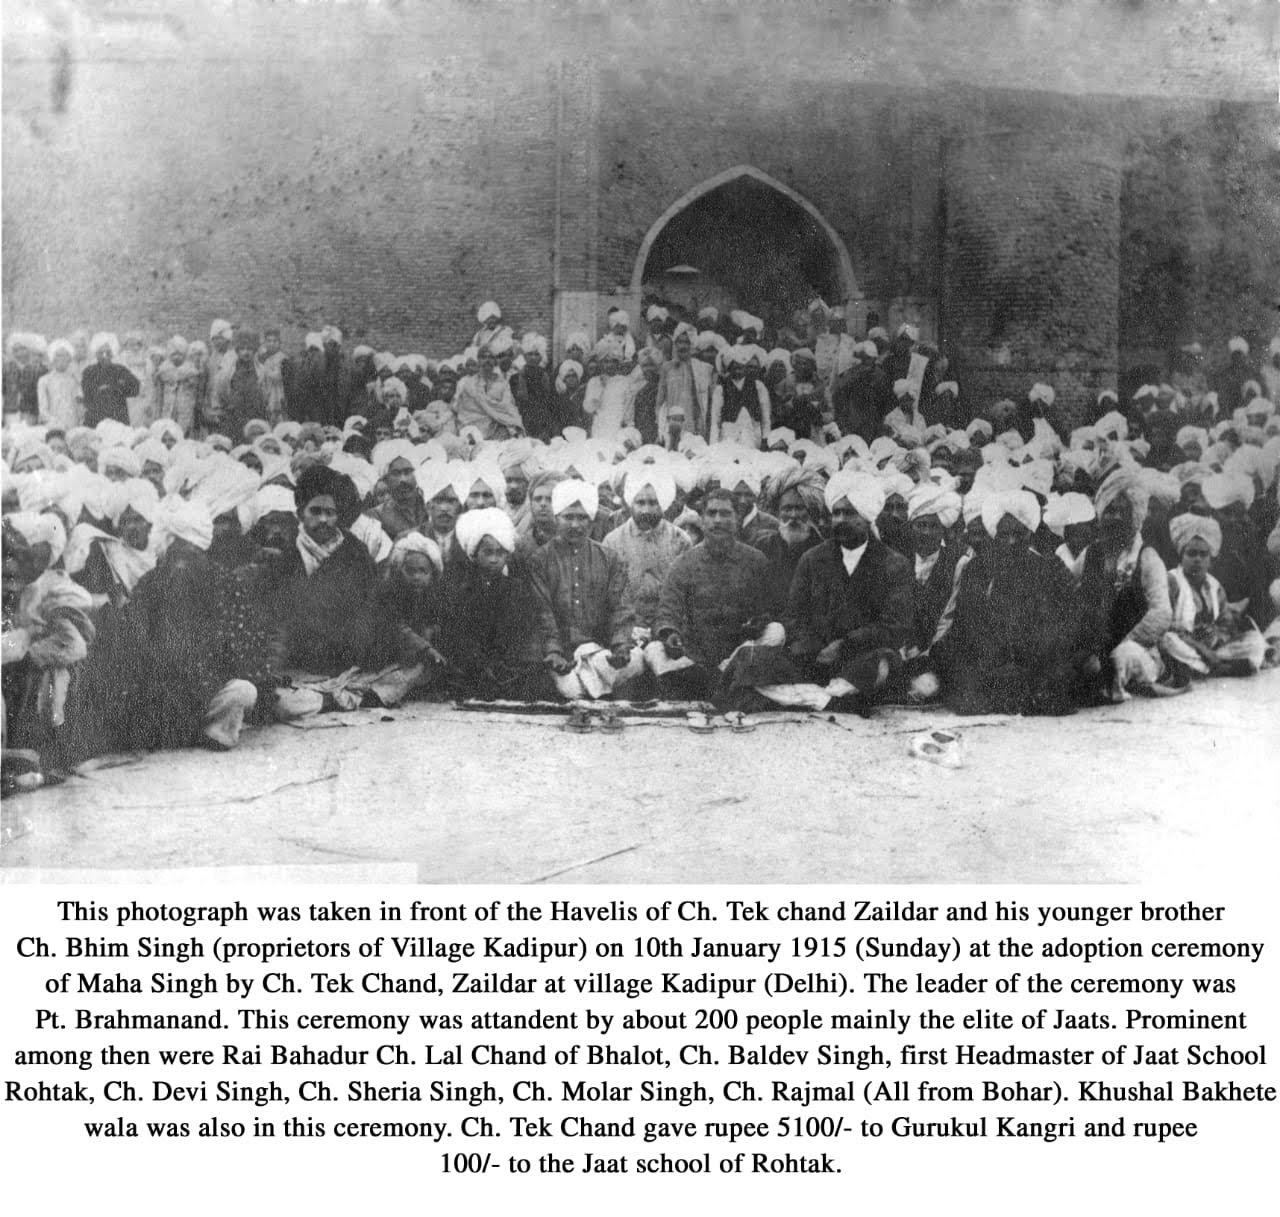 delhi's Havel of Kadipur picture of 1915